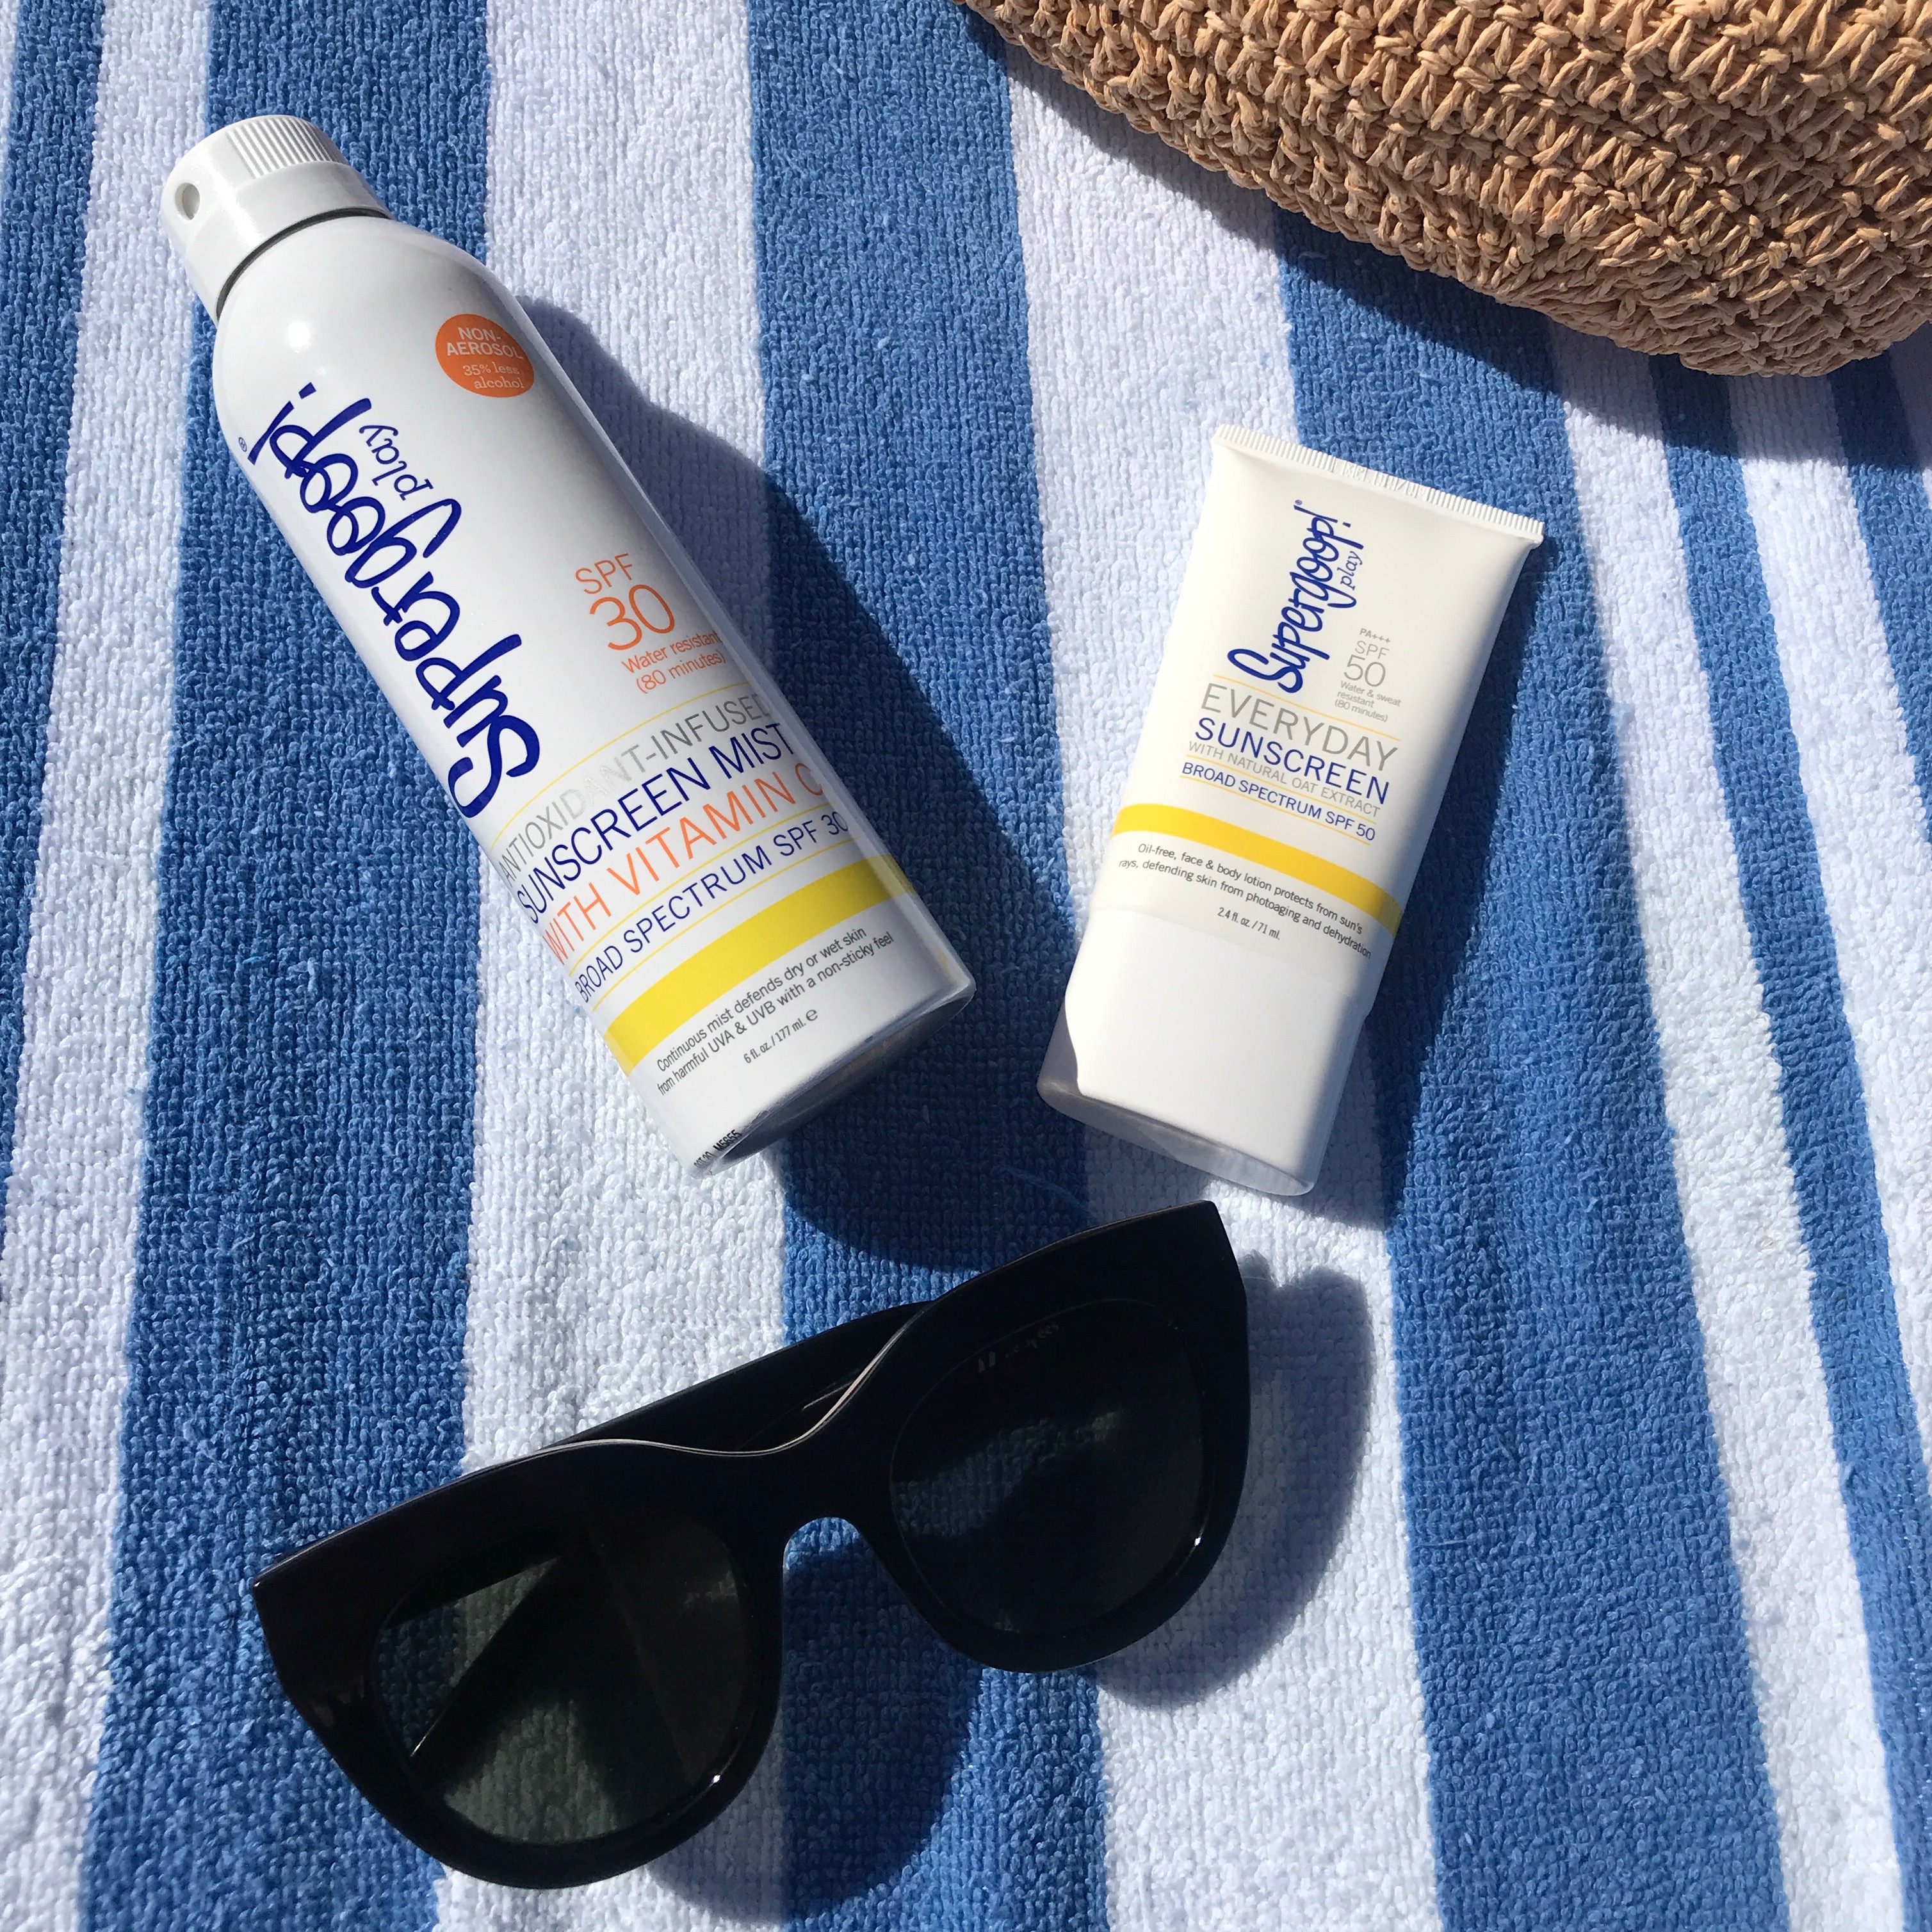 sunscreen for a beach day